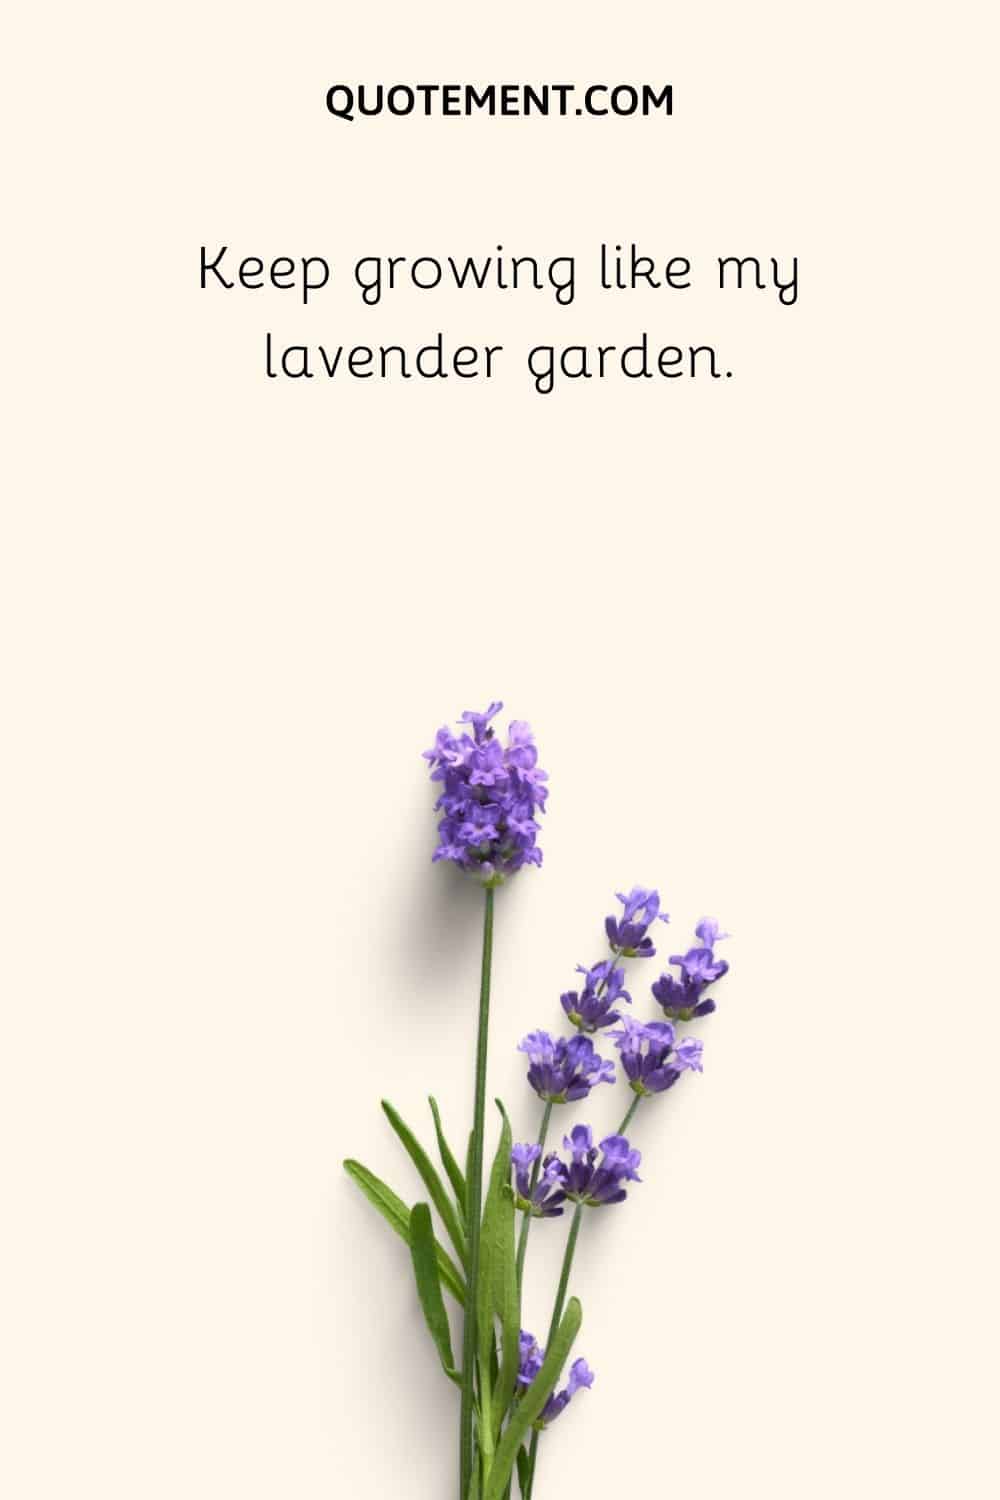 Keep growing like my lavender garden